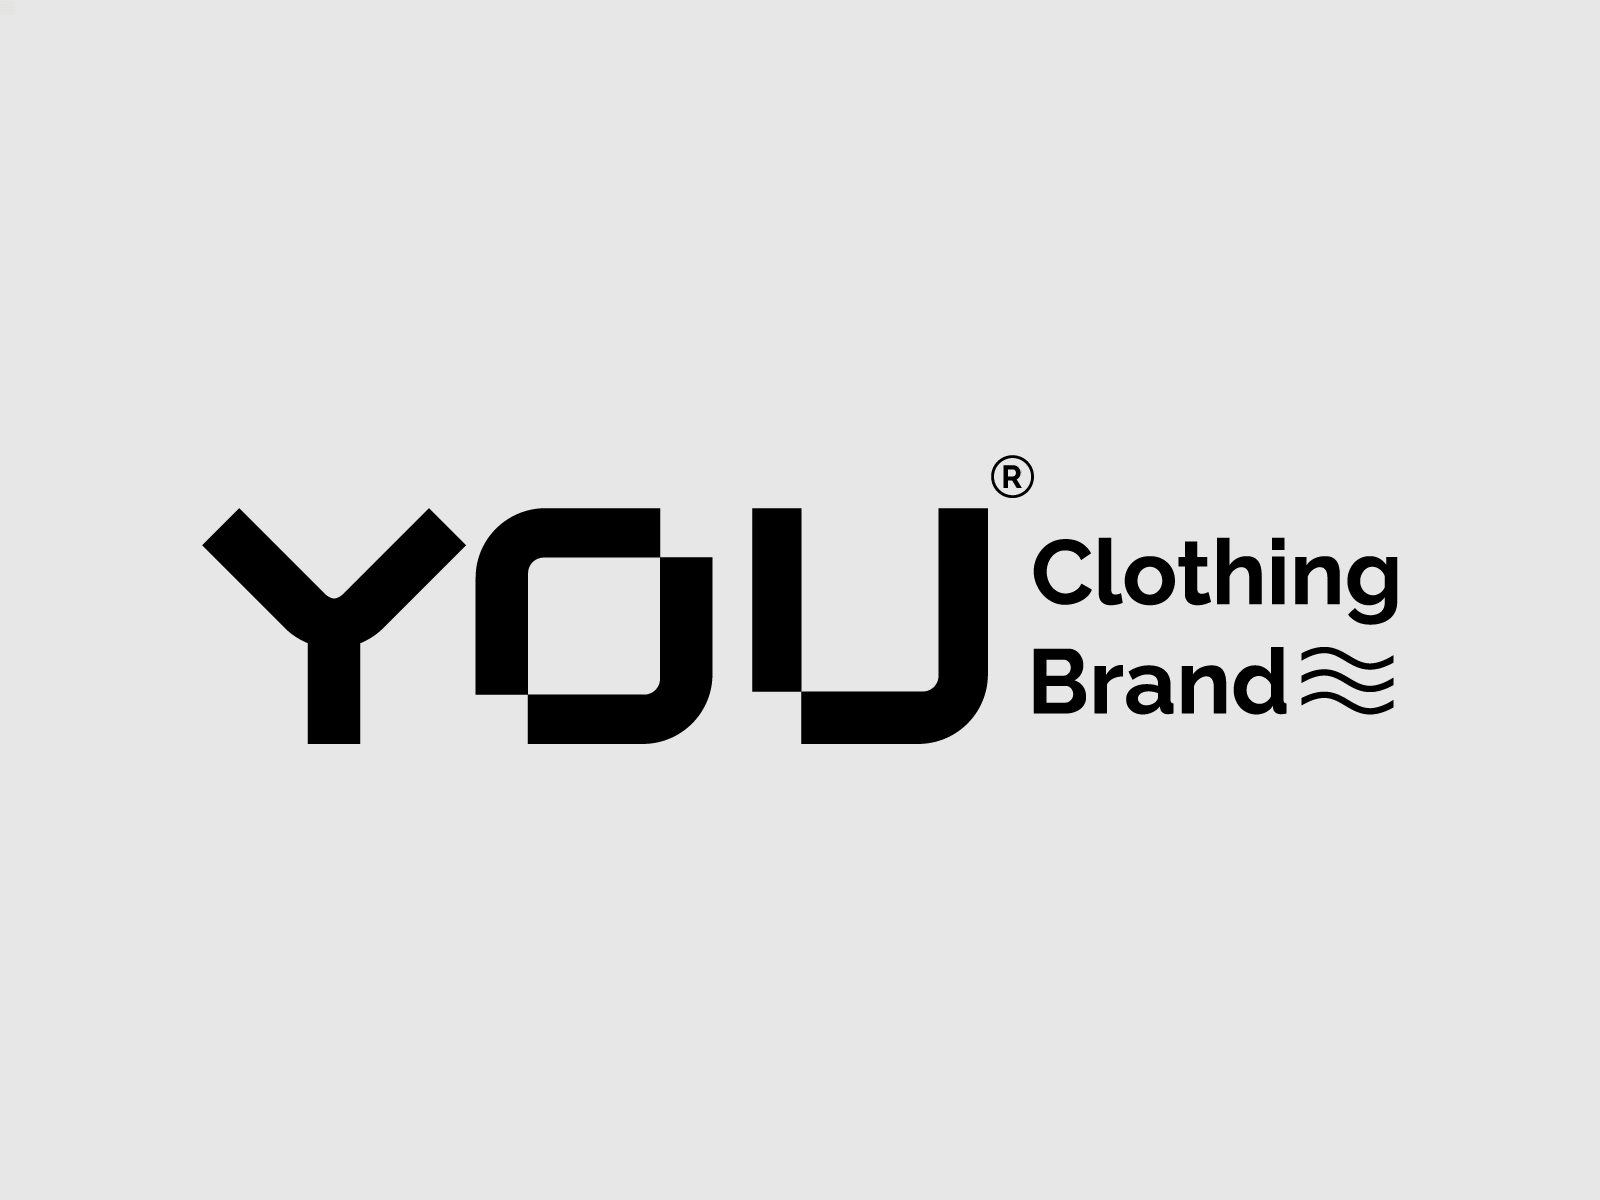 You Clothing Fashion Brand Visual Identity